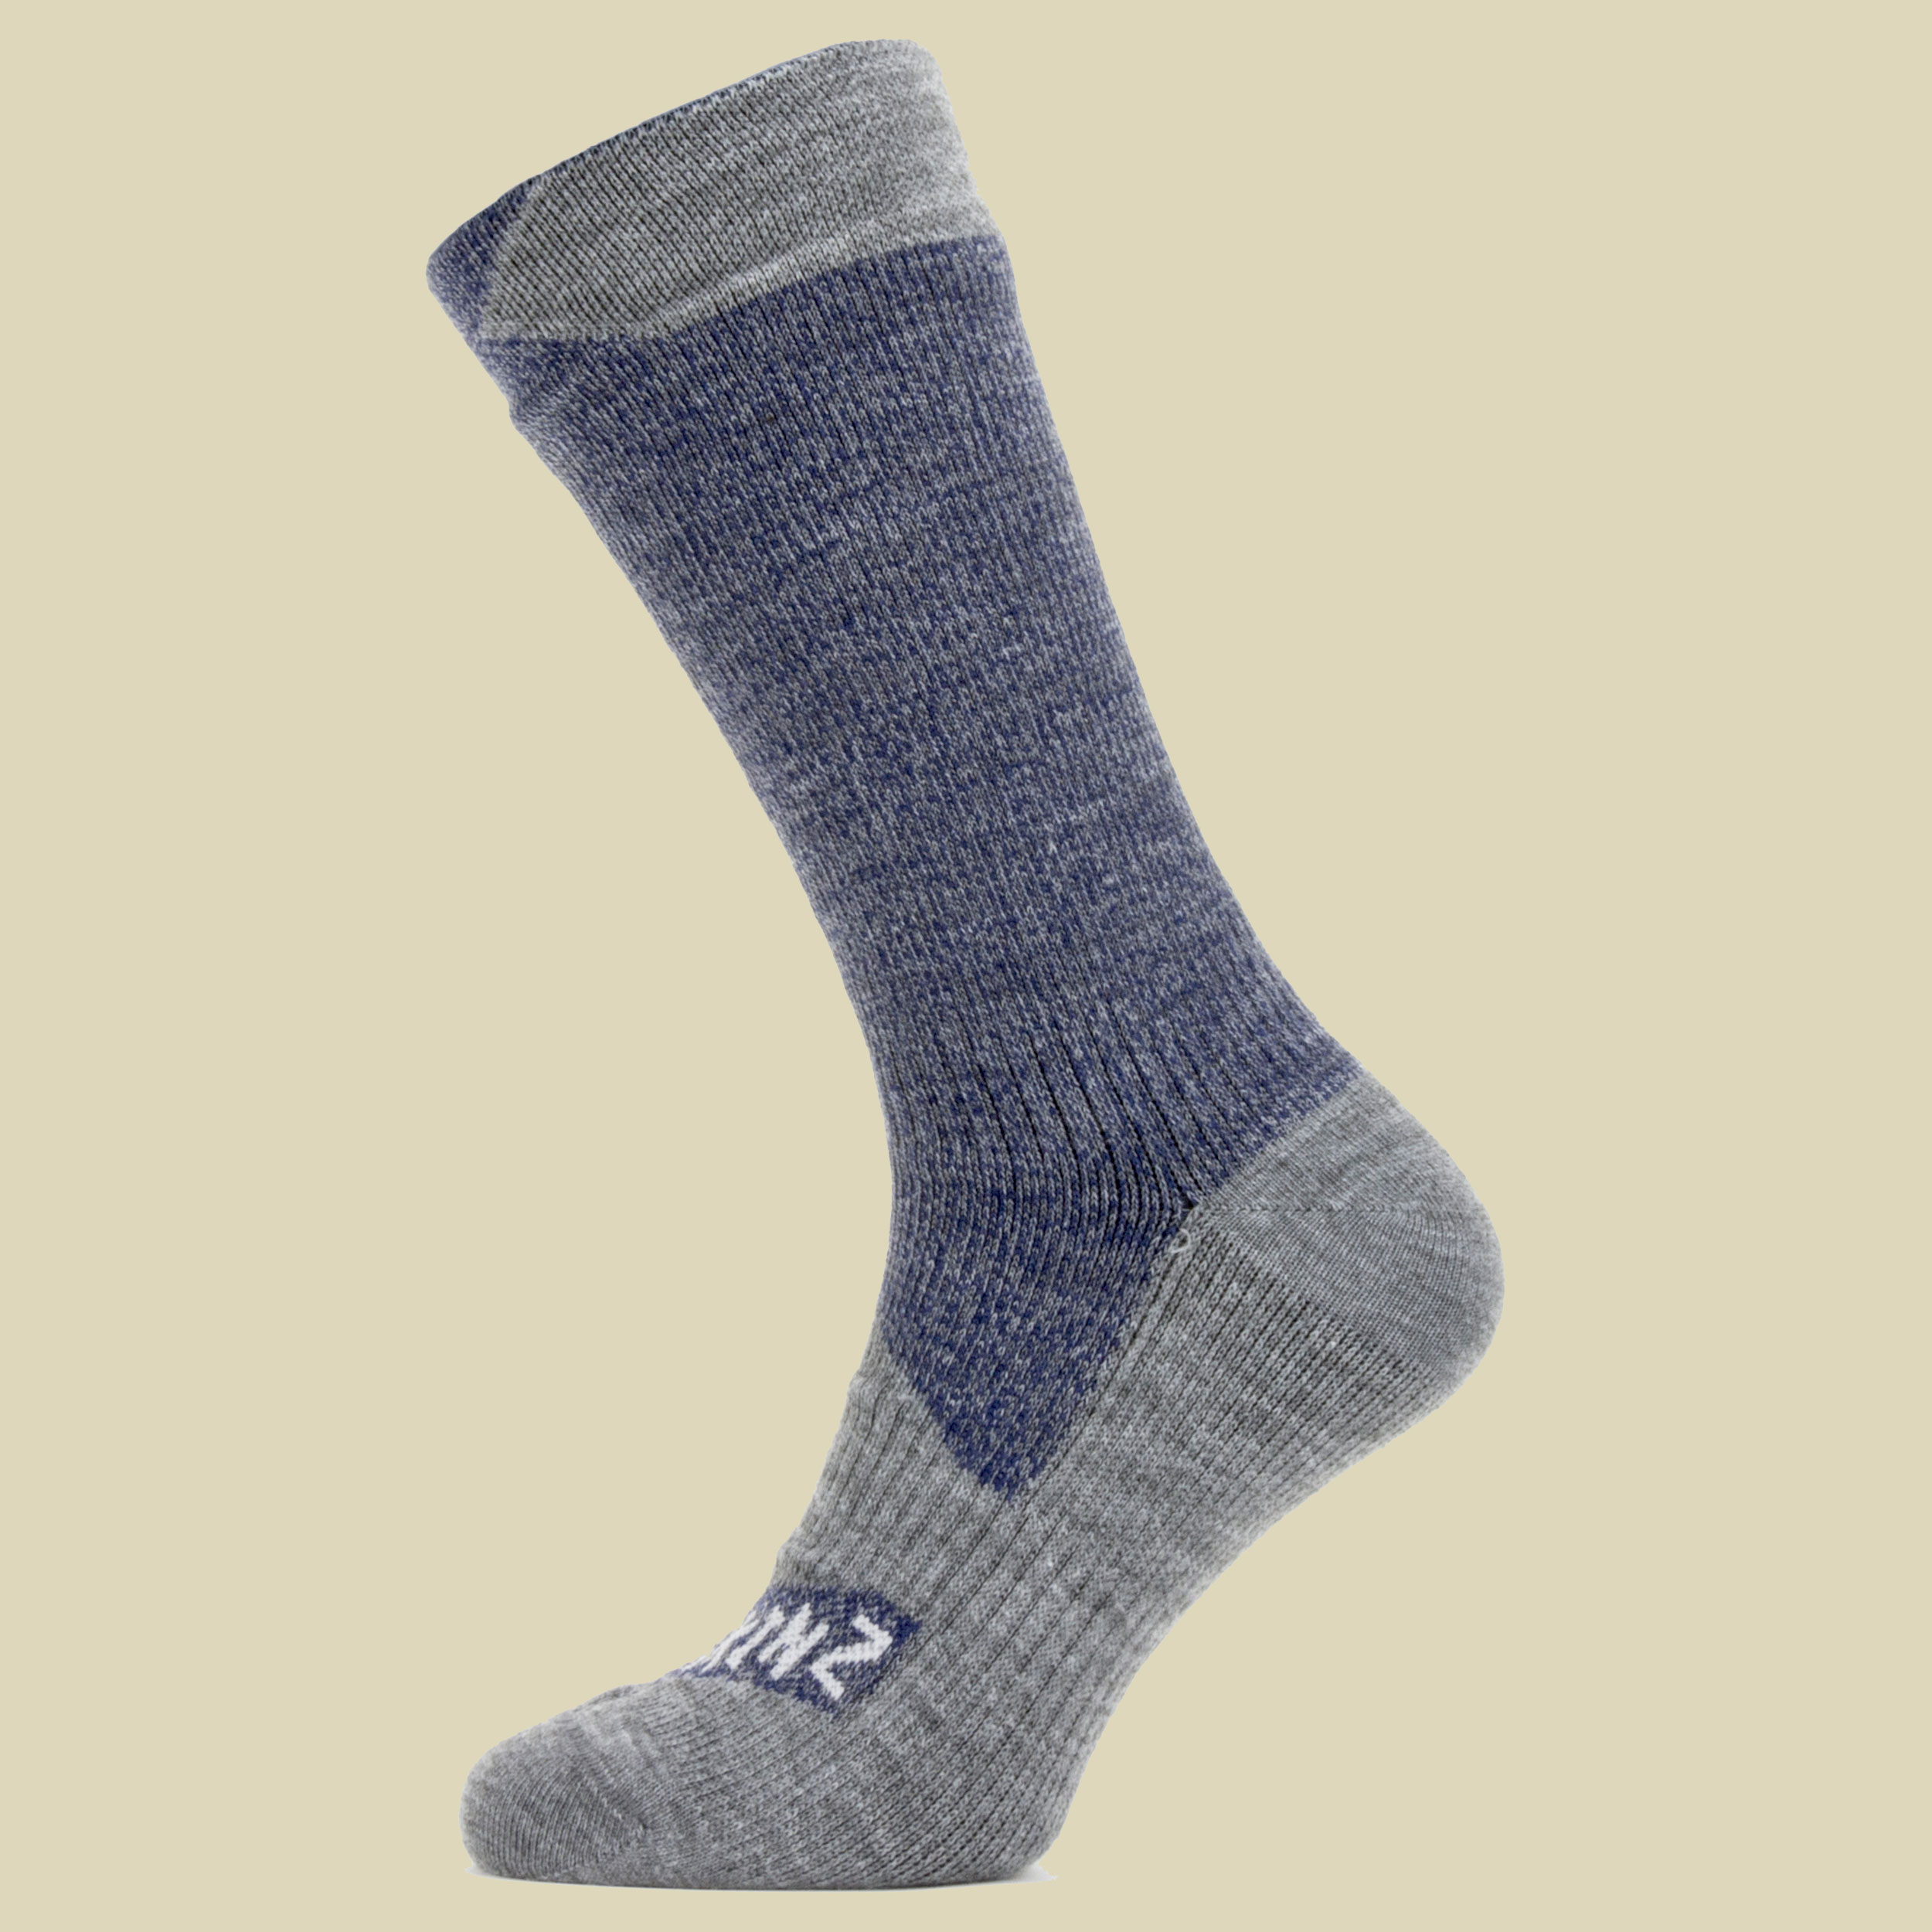 Waterproof All Weather Mid Length Sock Größe S (36-38) Farbe navy blue/grey marl